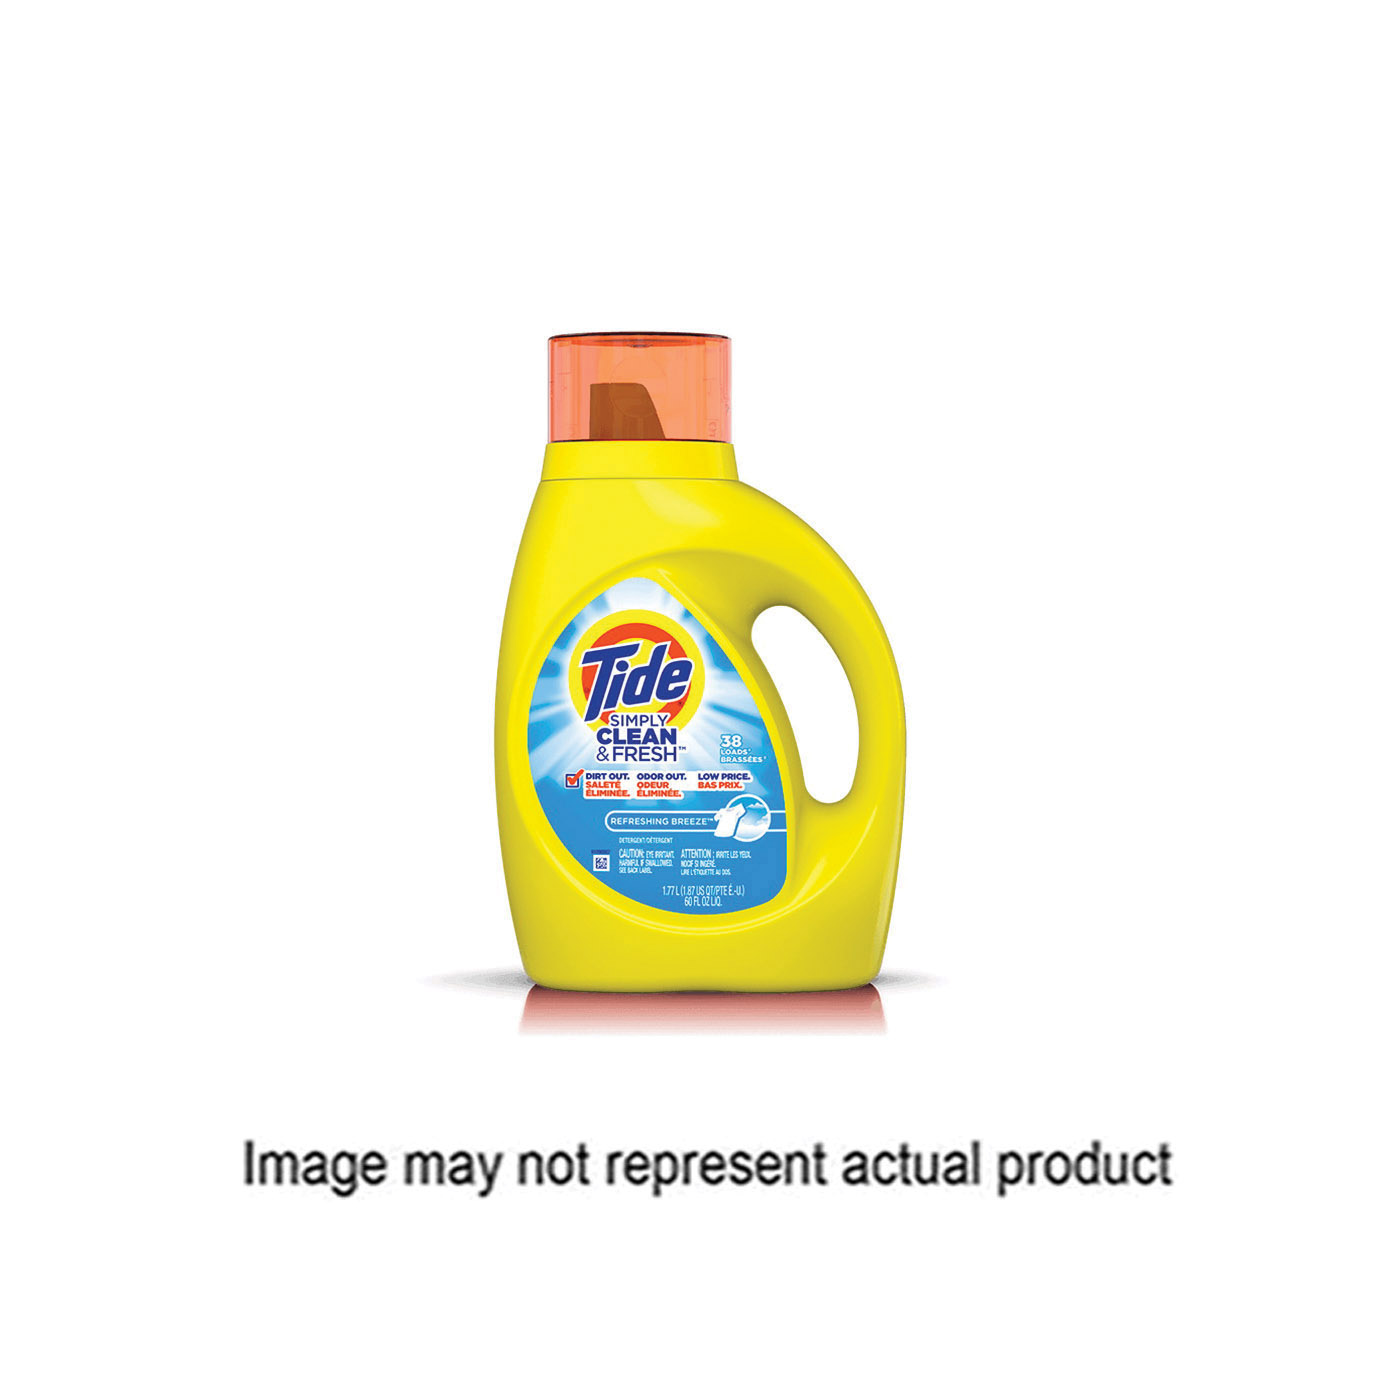 44105 Laundry Detergent, 31 oz, Liquid, Refreshing Breeze